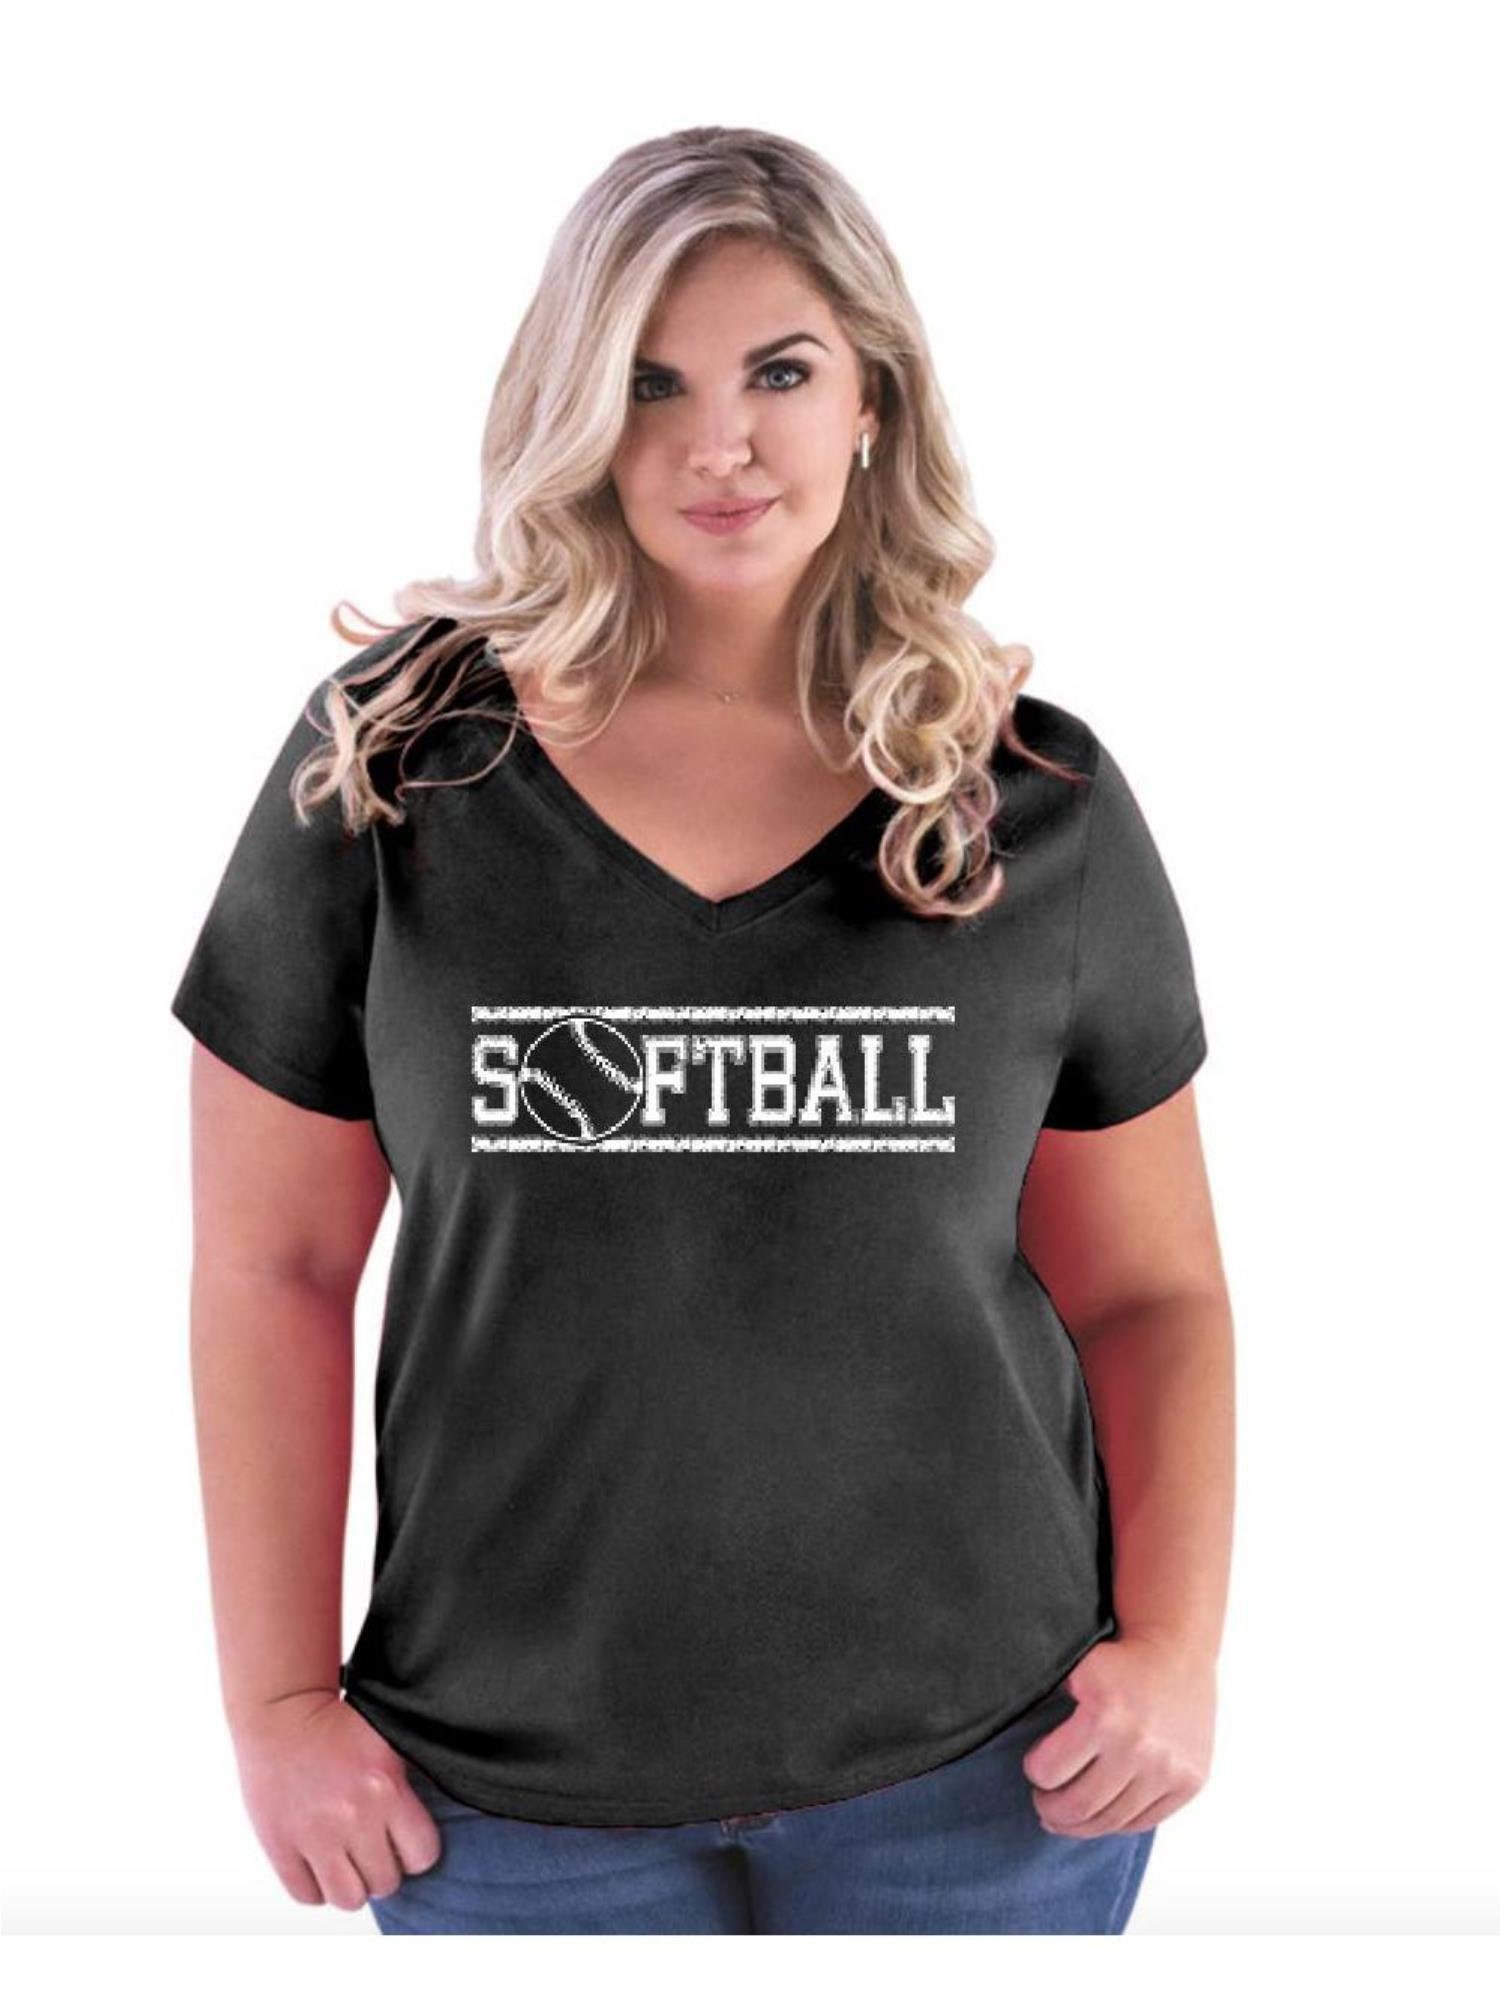 Softball With Ball Women's Curvy Plus Size Scoopneck Tee - Etsy